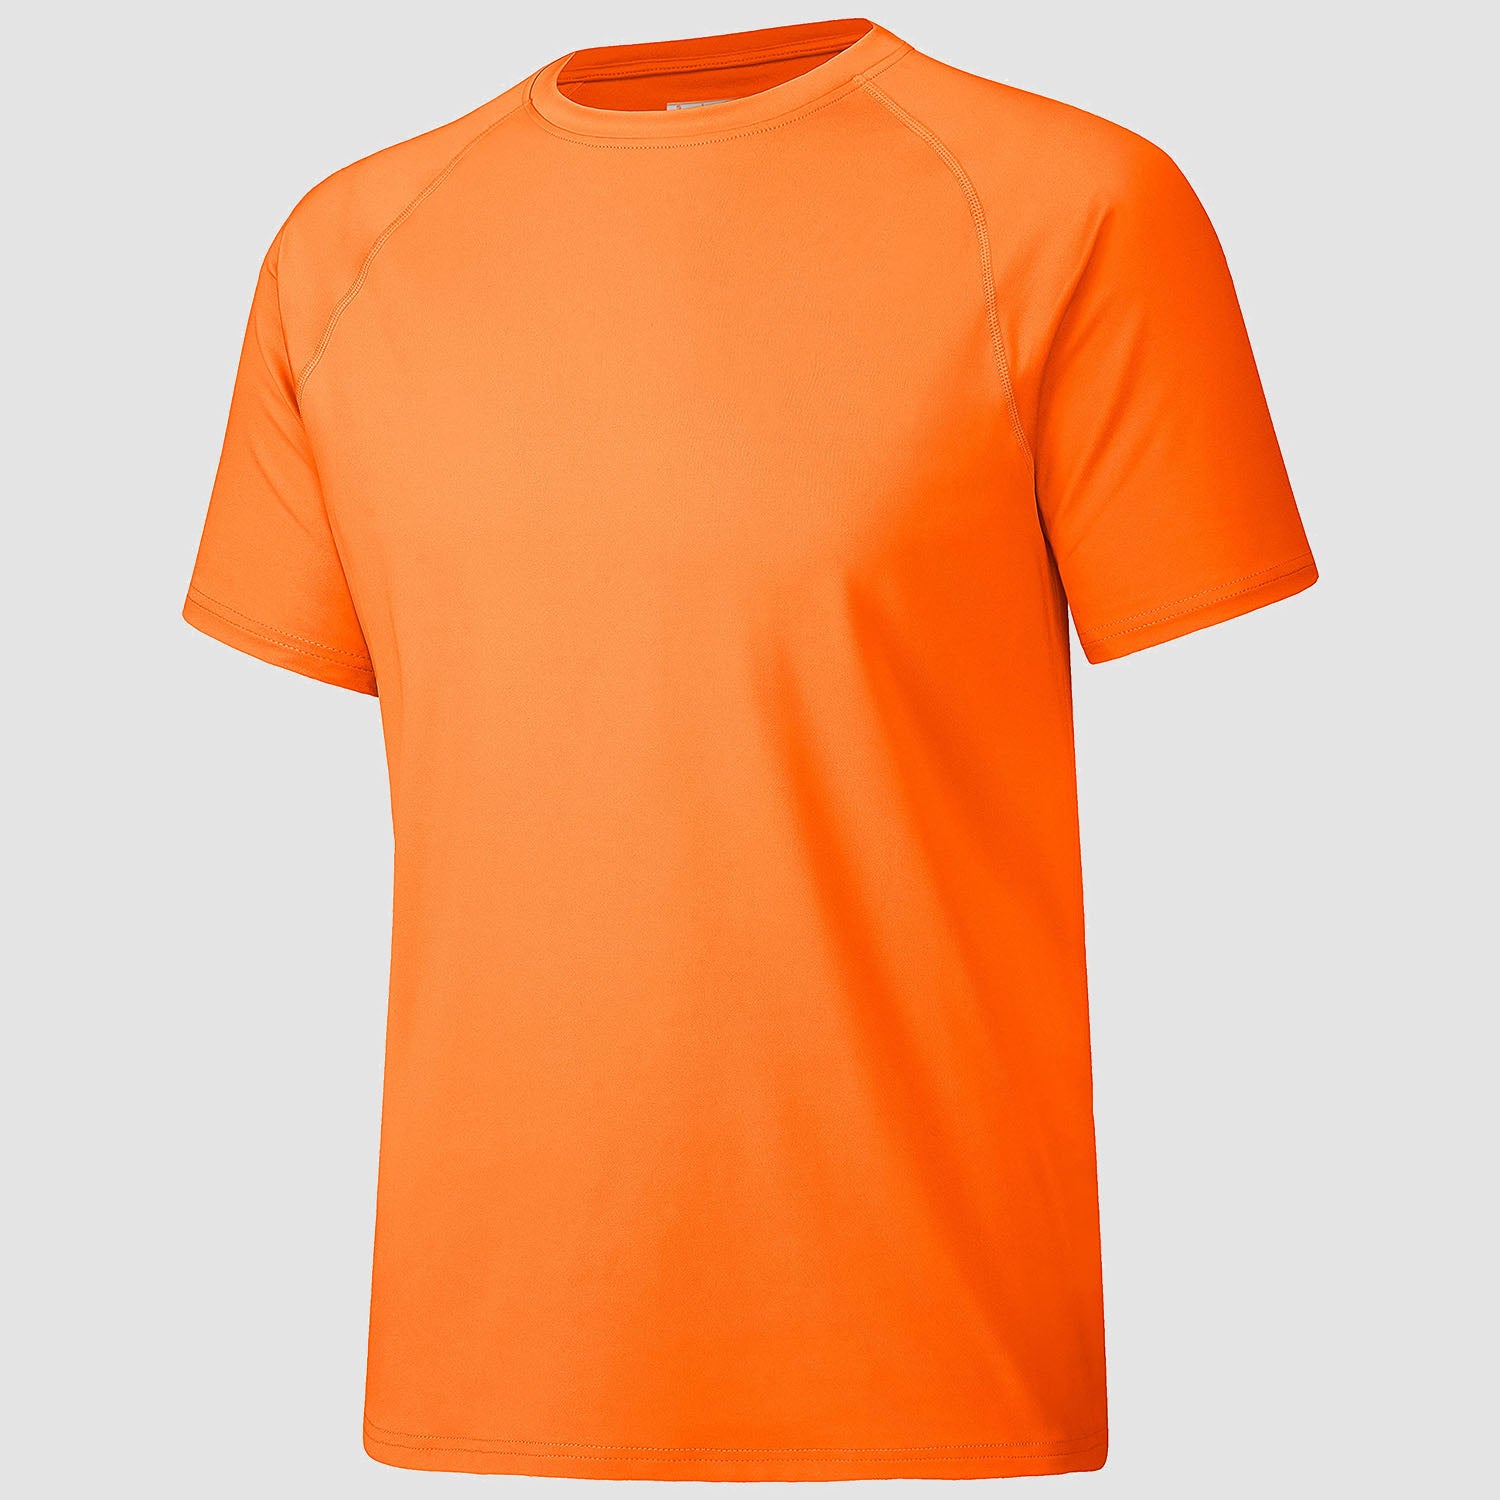 Shop Classic T-Shirts & Polos for Men Online